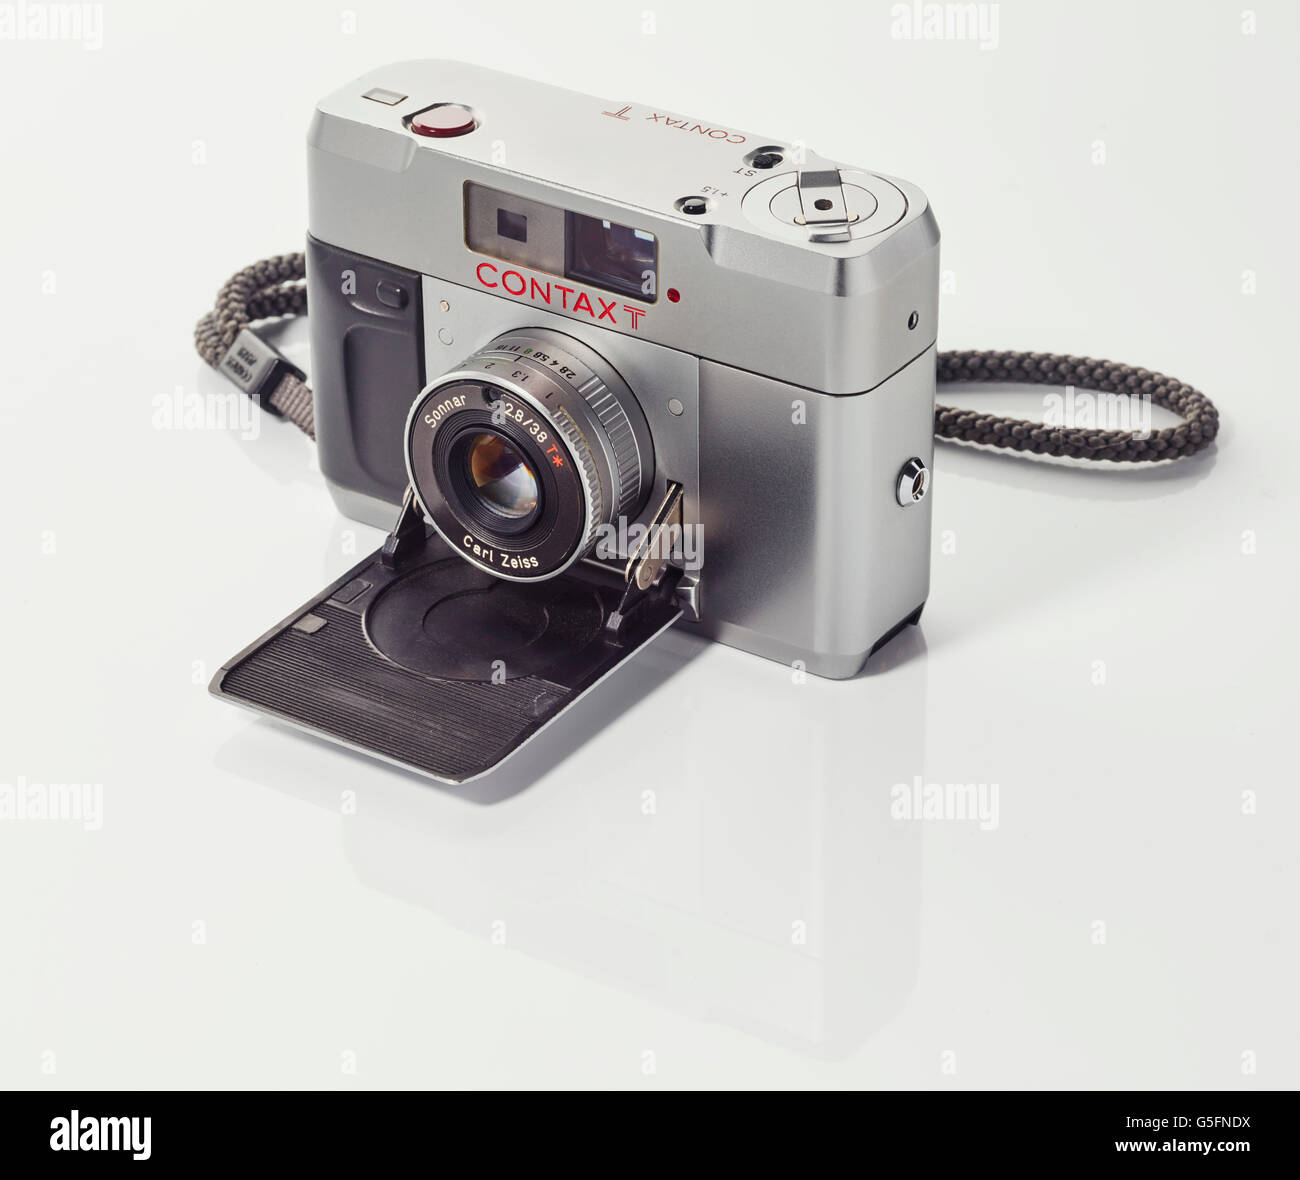 Contax T fotocamera da 35mm Foto Stock